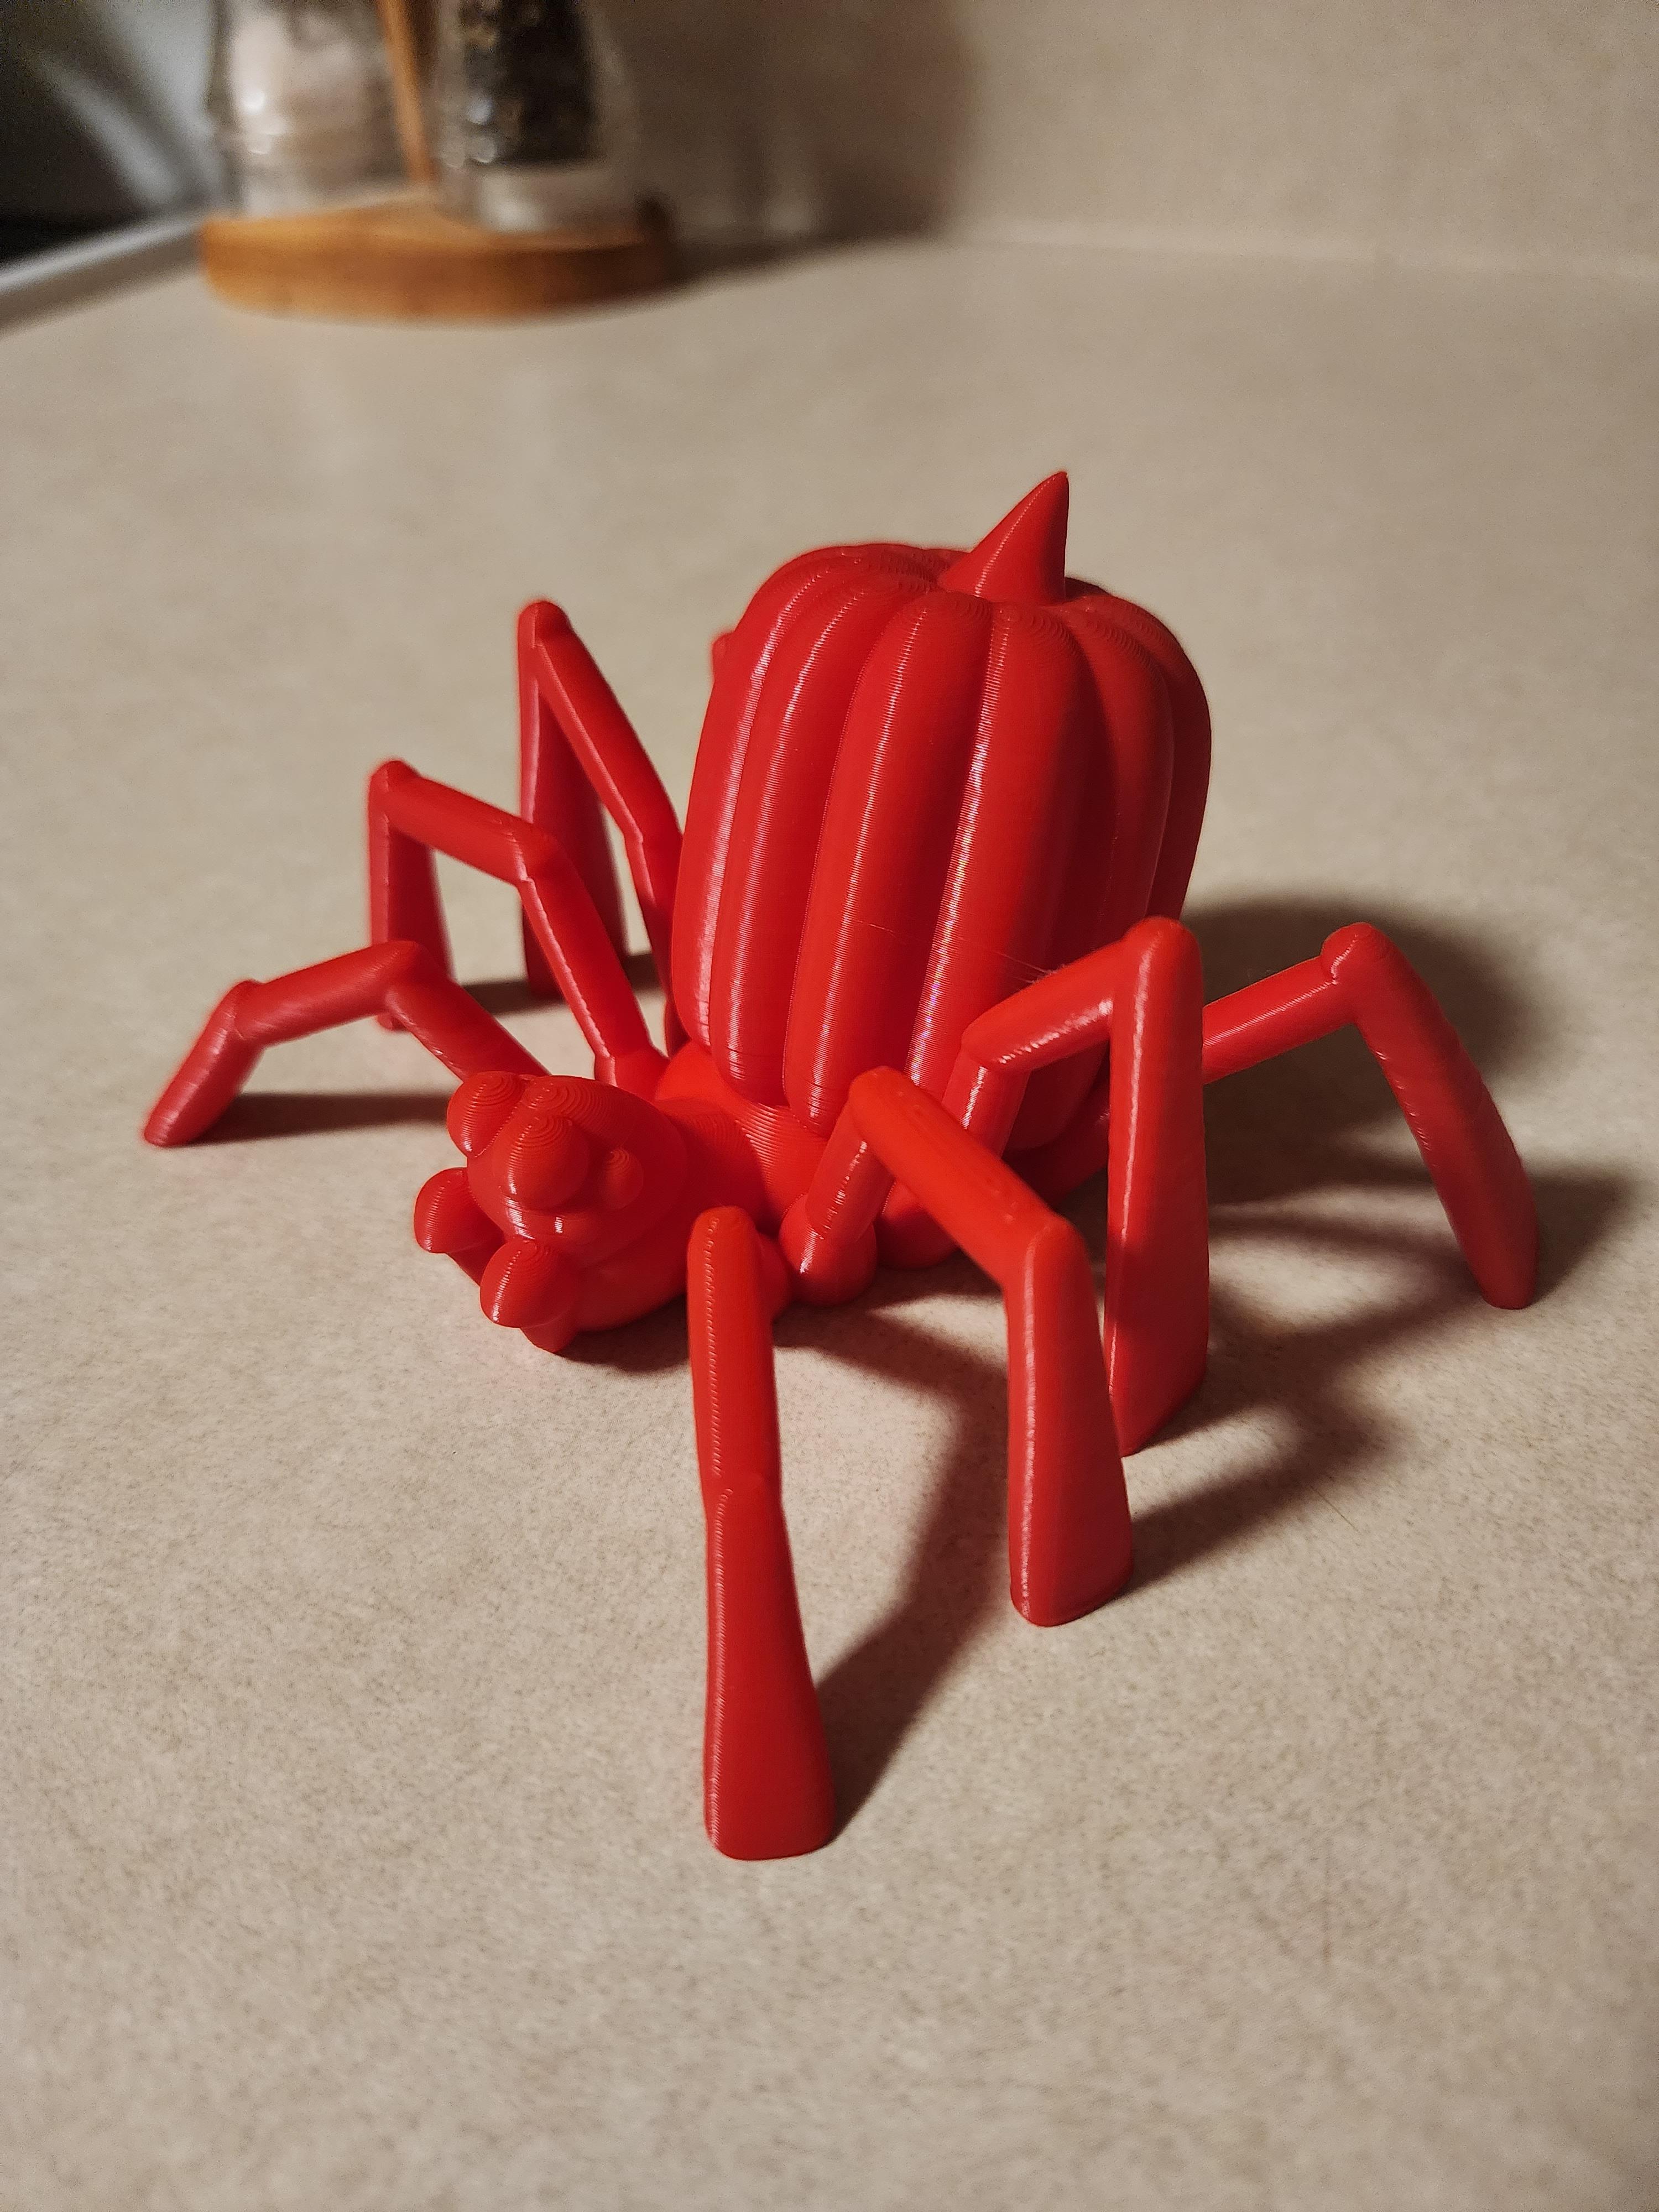 Spider Pumpkin V2 3d model